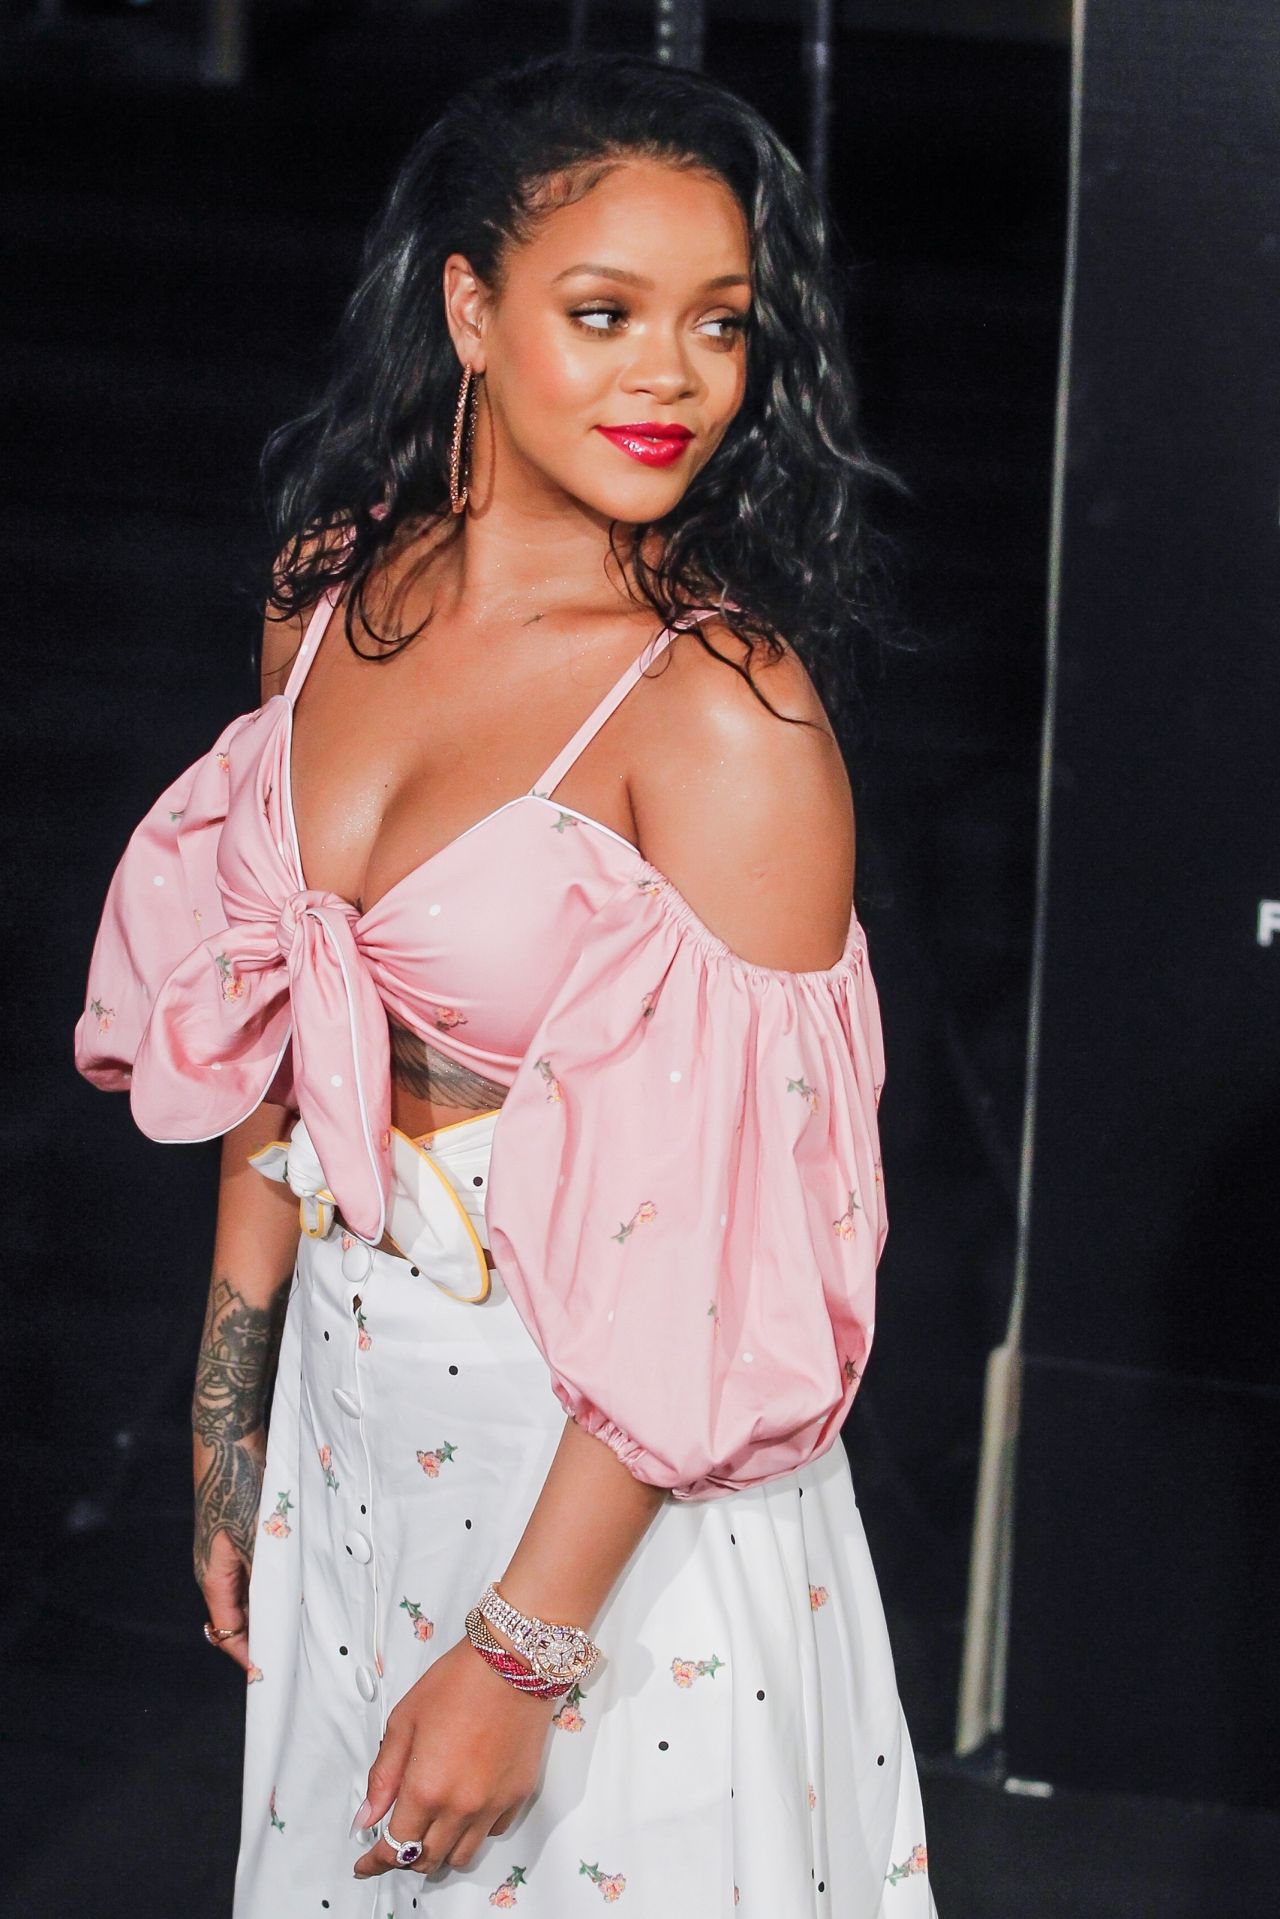 Rihanna wearing a very revealing yet classy pink top